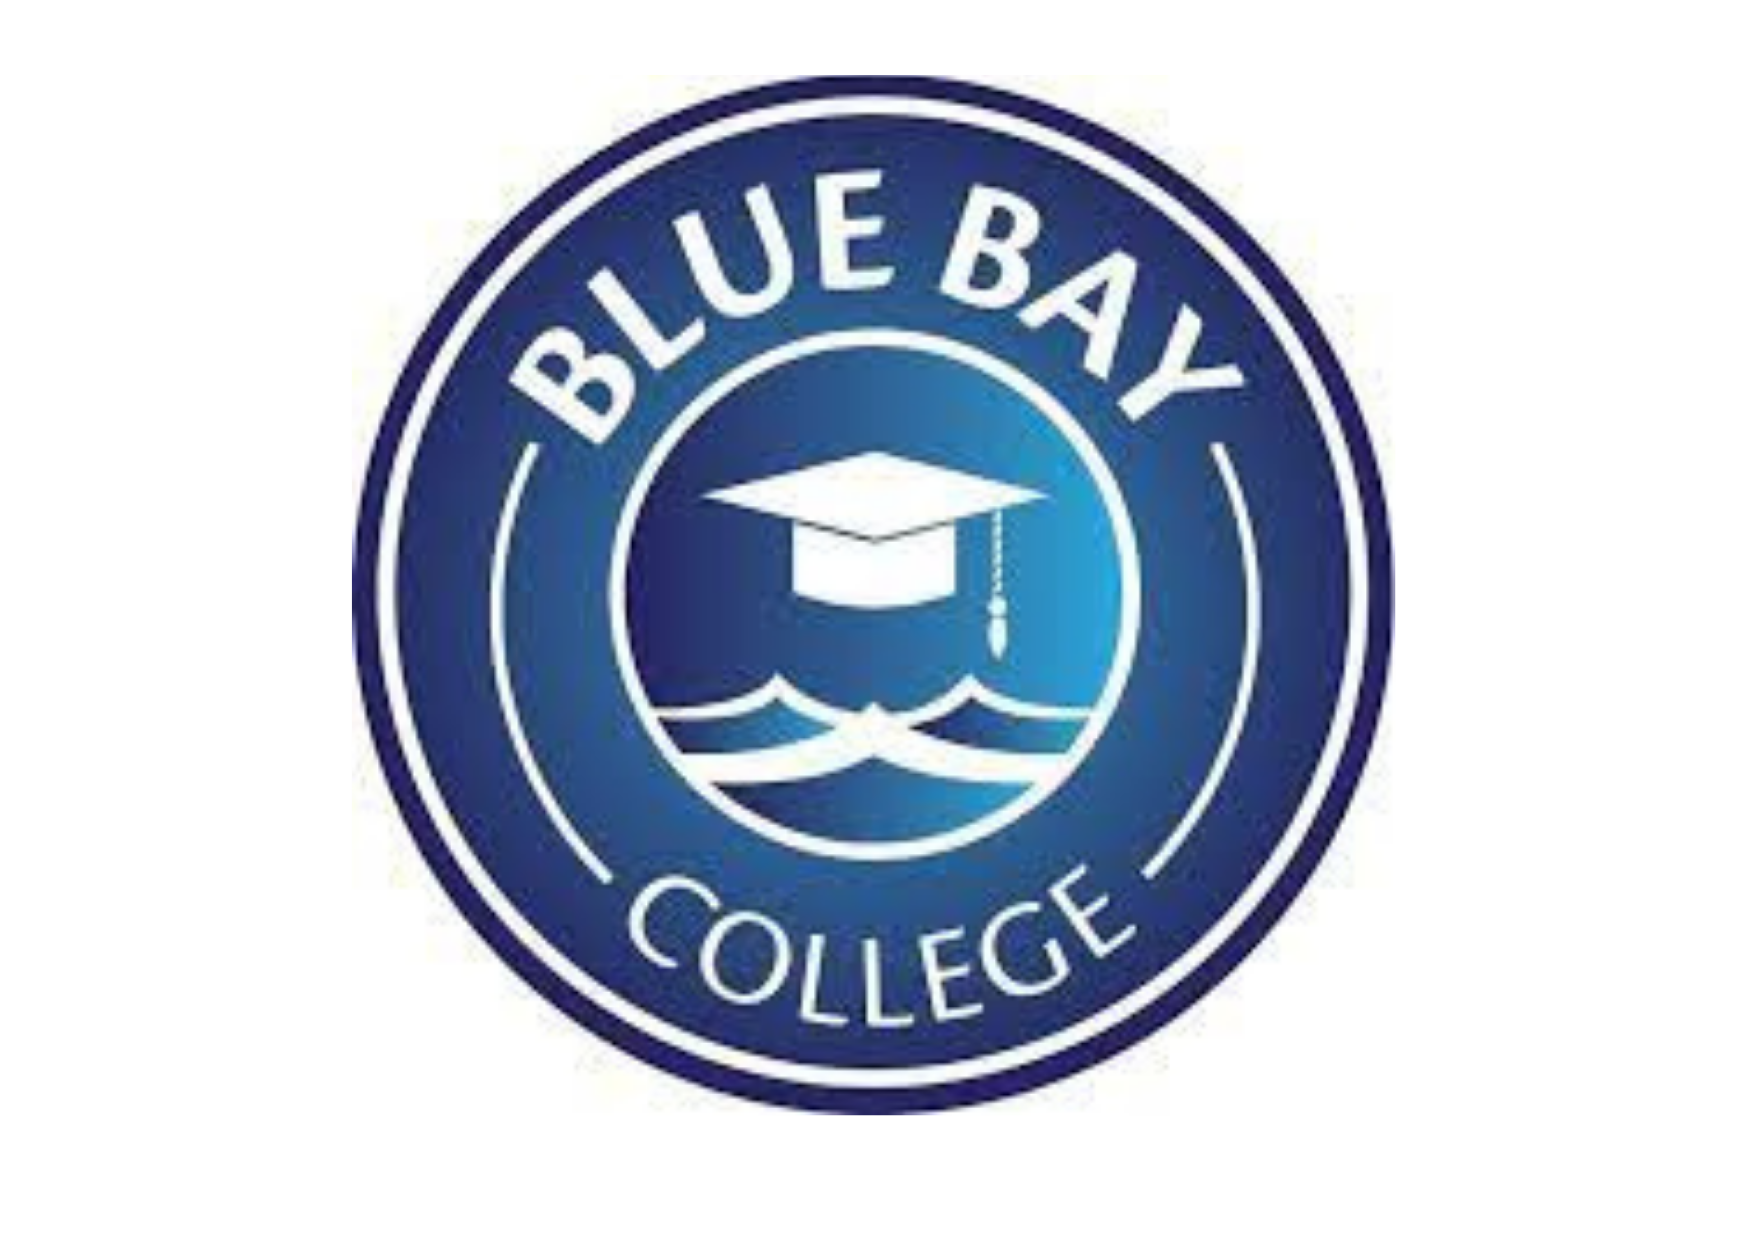 Blue Bay College